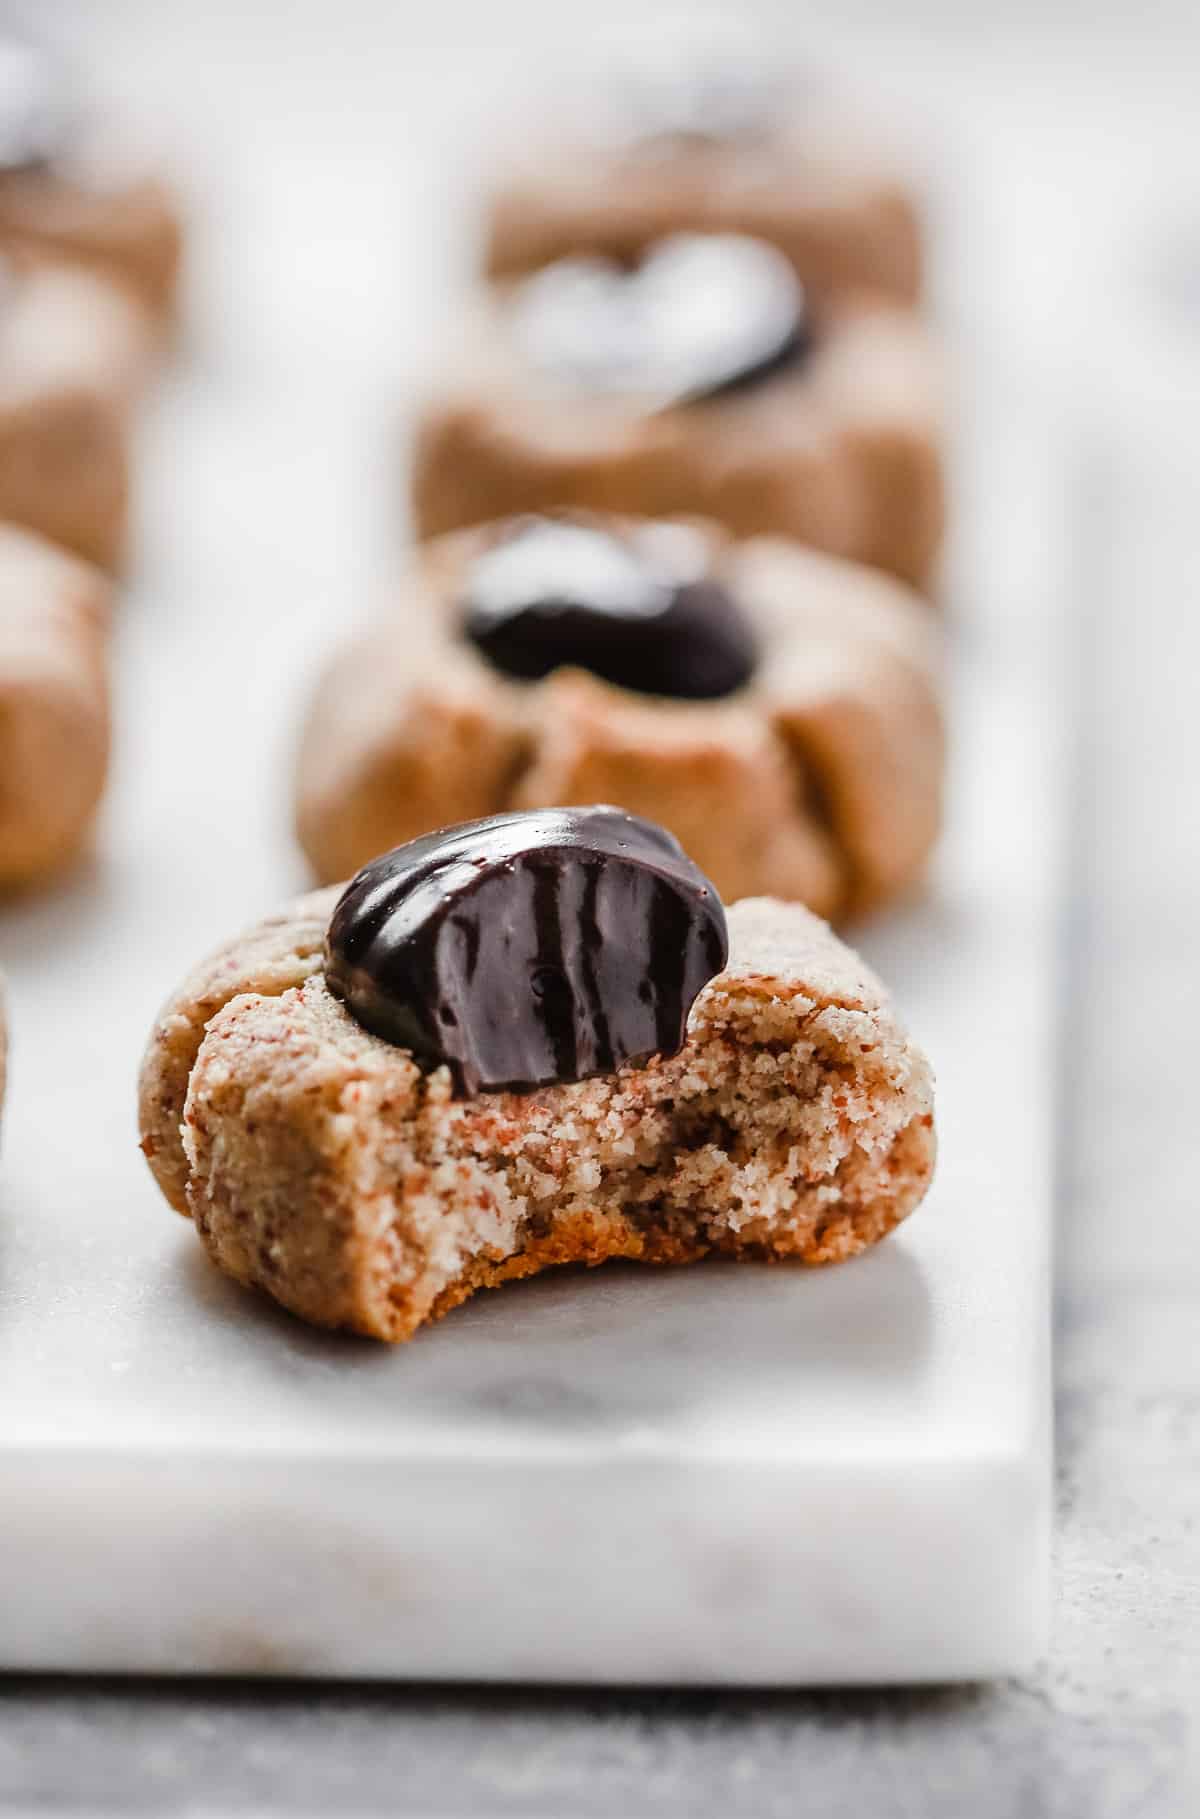 Sugar-free Nutella Thumbprint Cookies